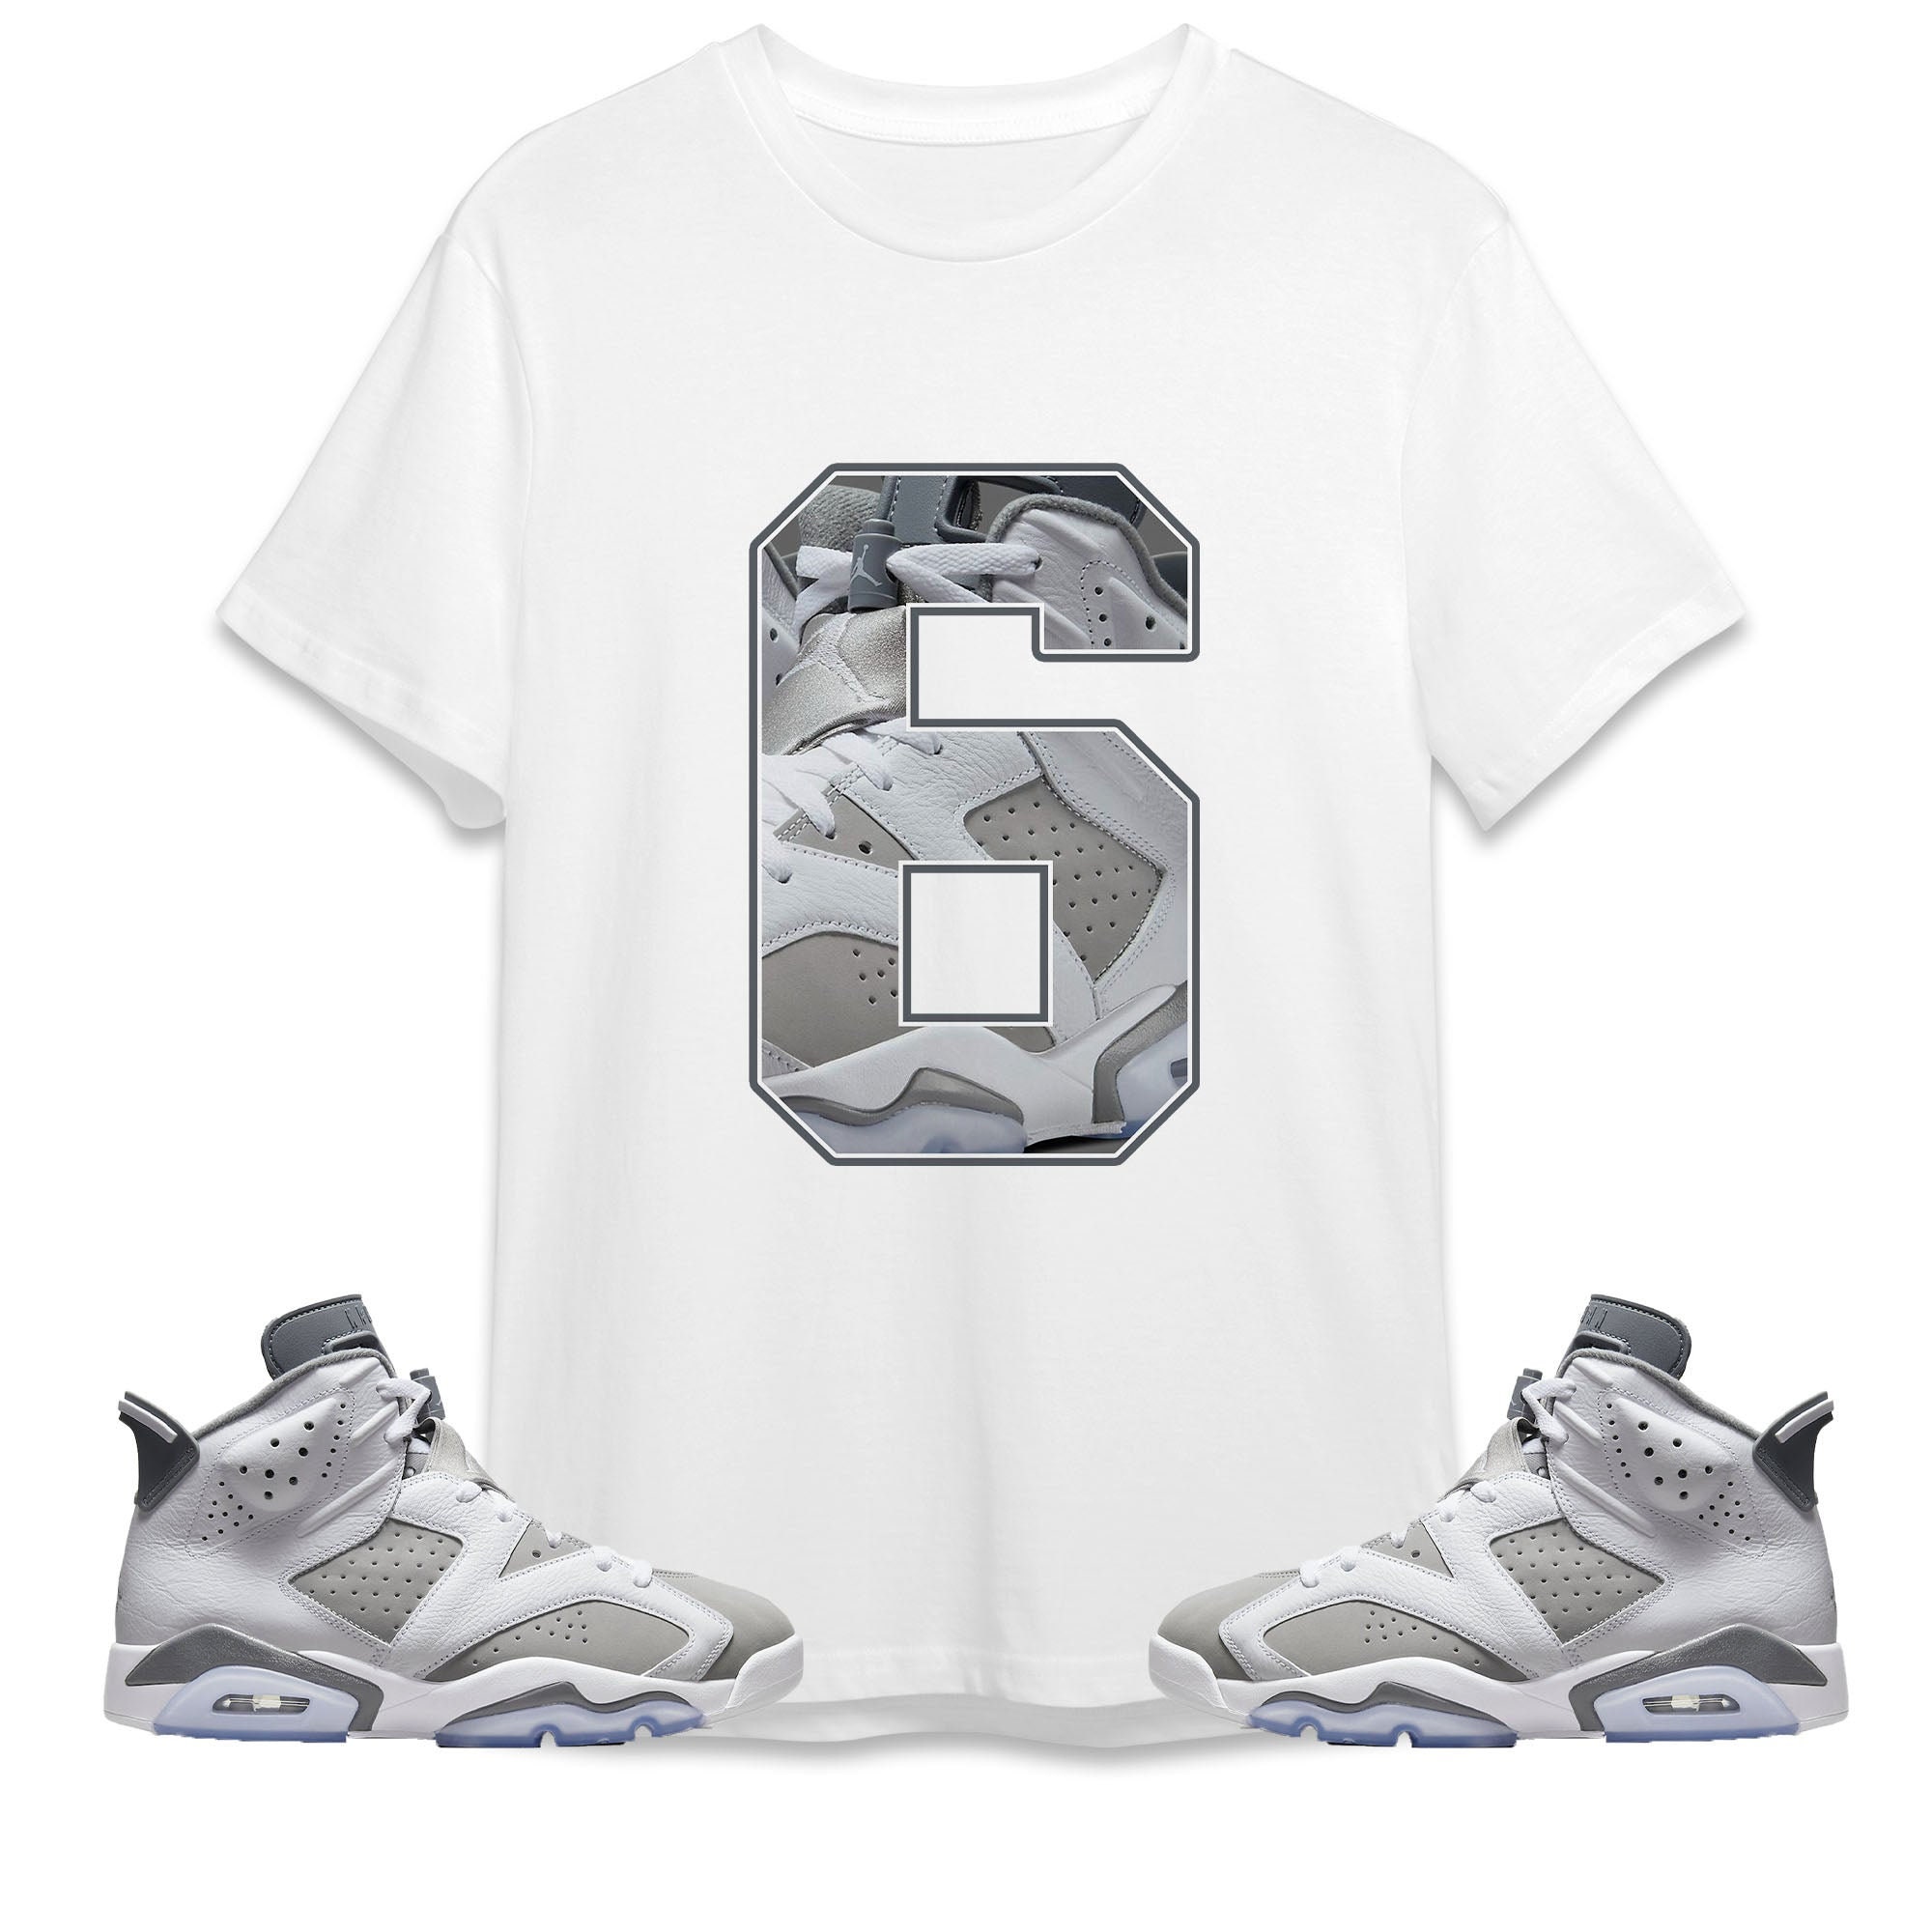 Number 6 CM6 Unisex Shirt Match Jordan 6 Cool Grey